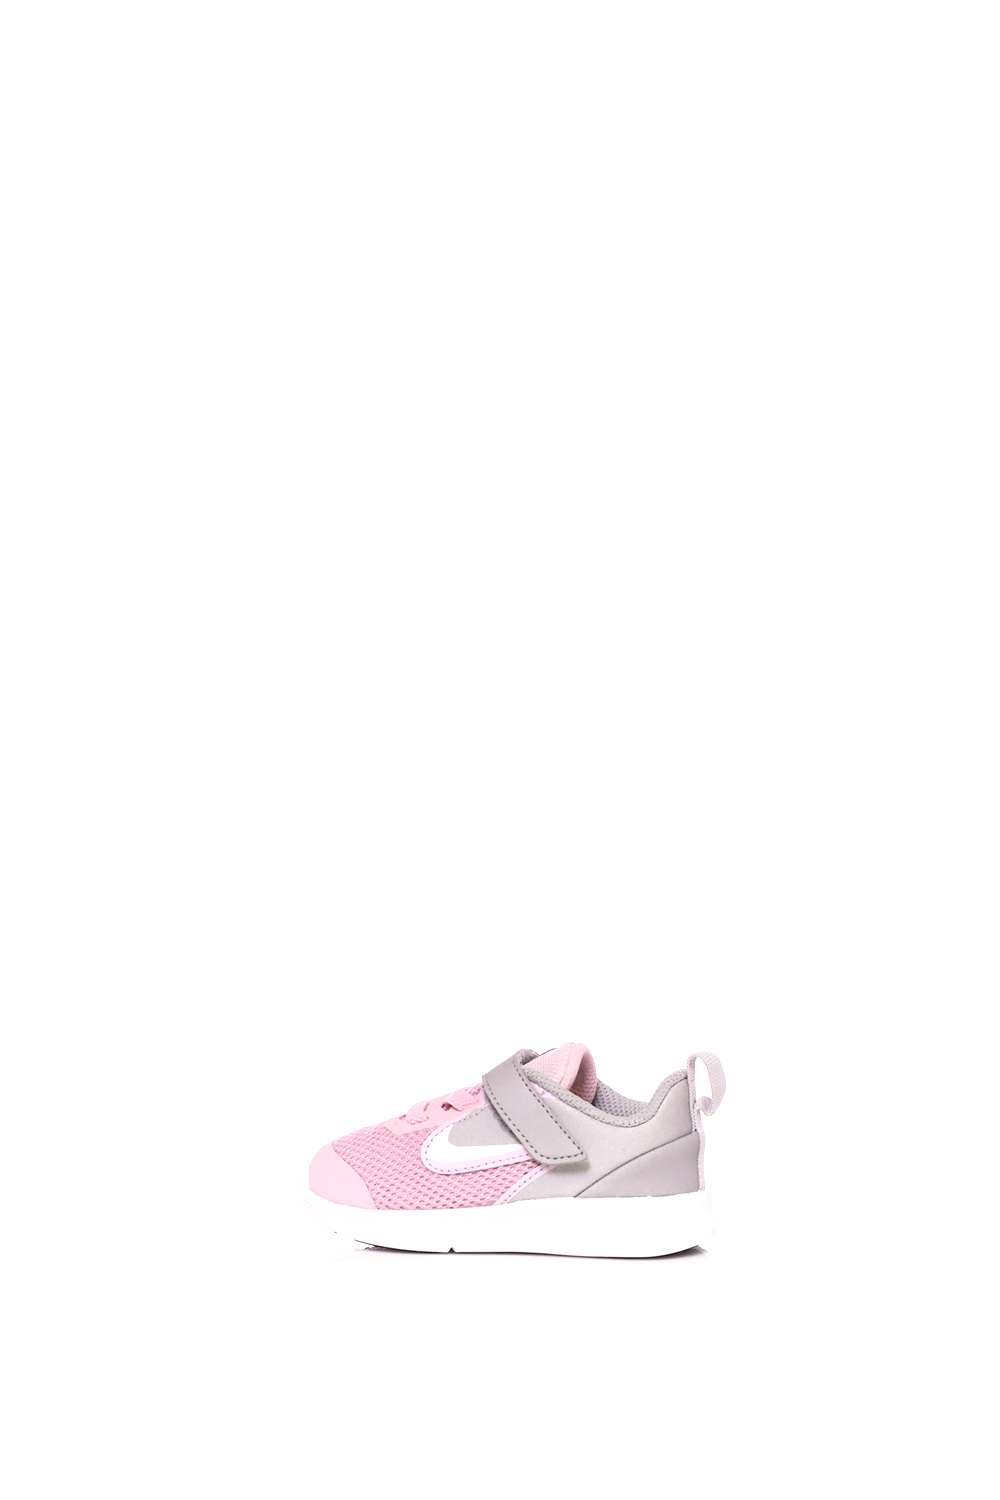 NIKE - Βρεφικά αθλητικά παπούτσια NIKE DOWNSHIFTER 9 ροζ Παιδικά/Baby/Παπούτσια/Αθλητικά